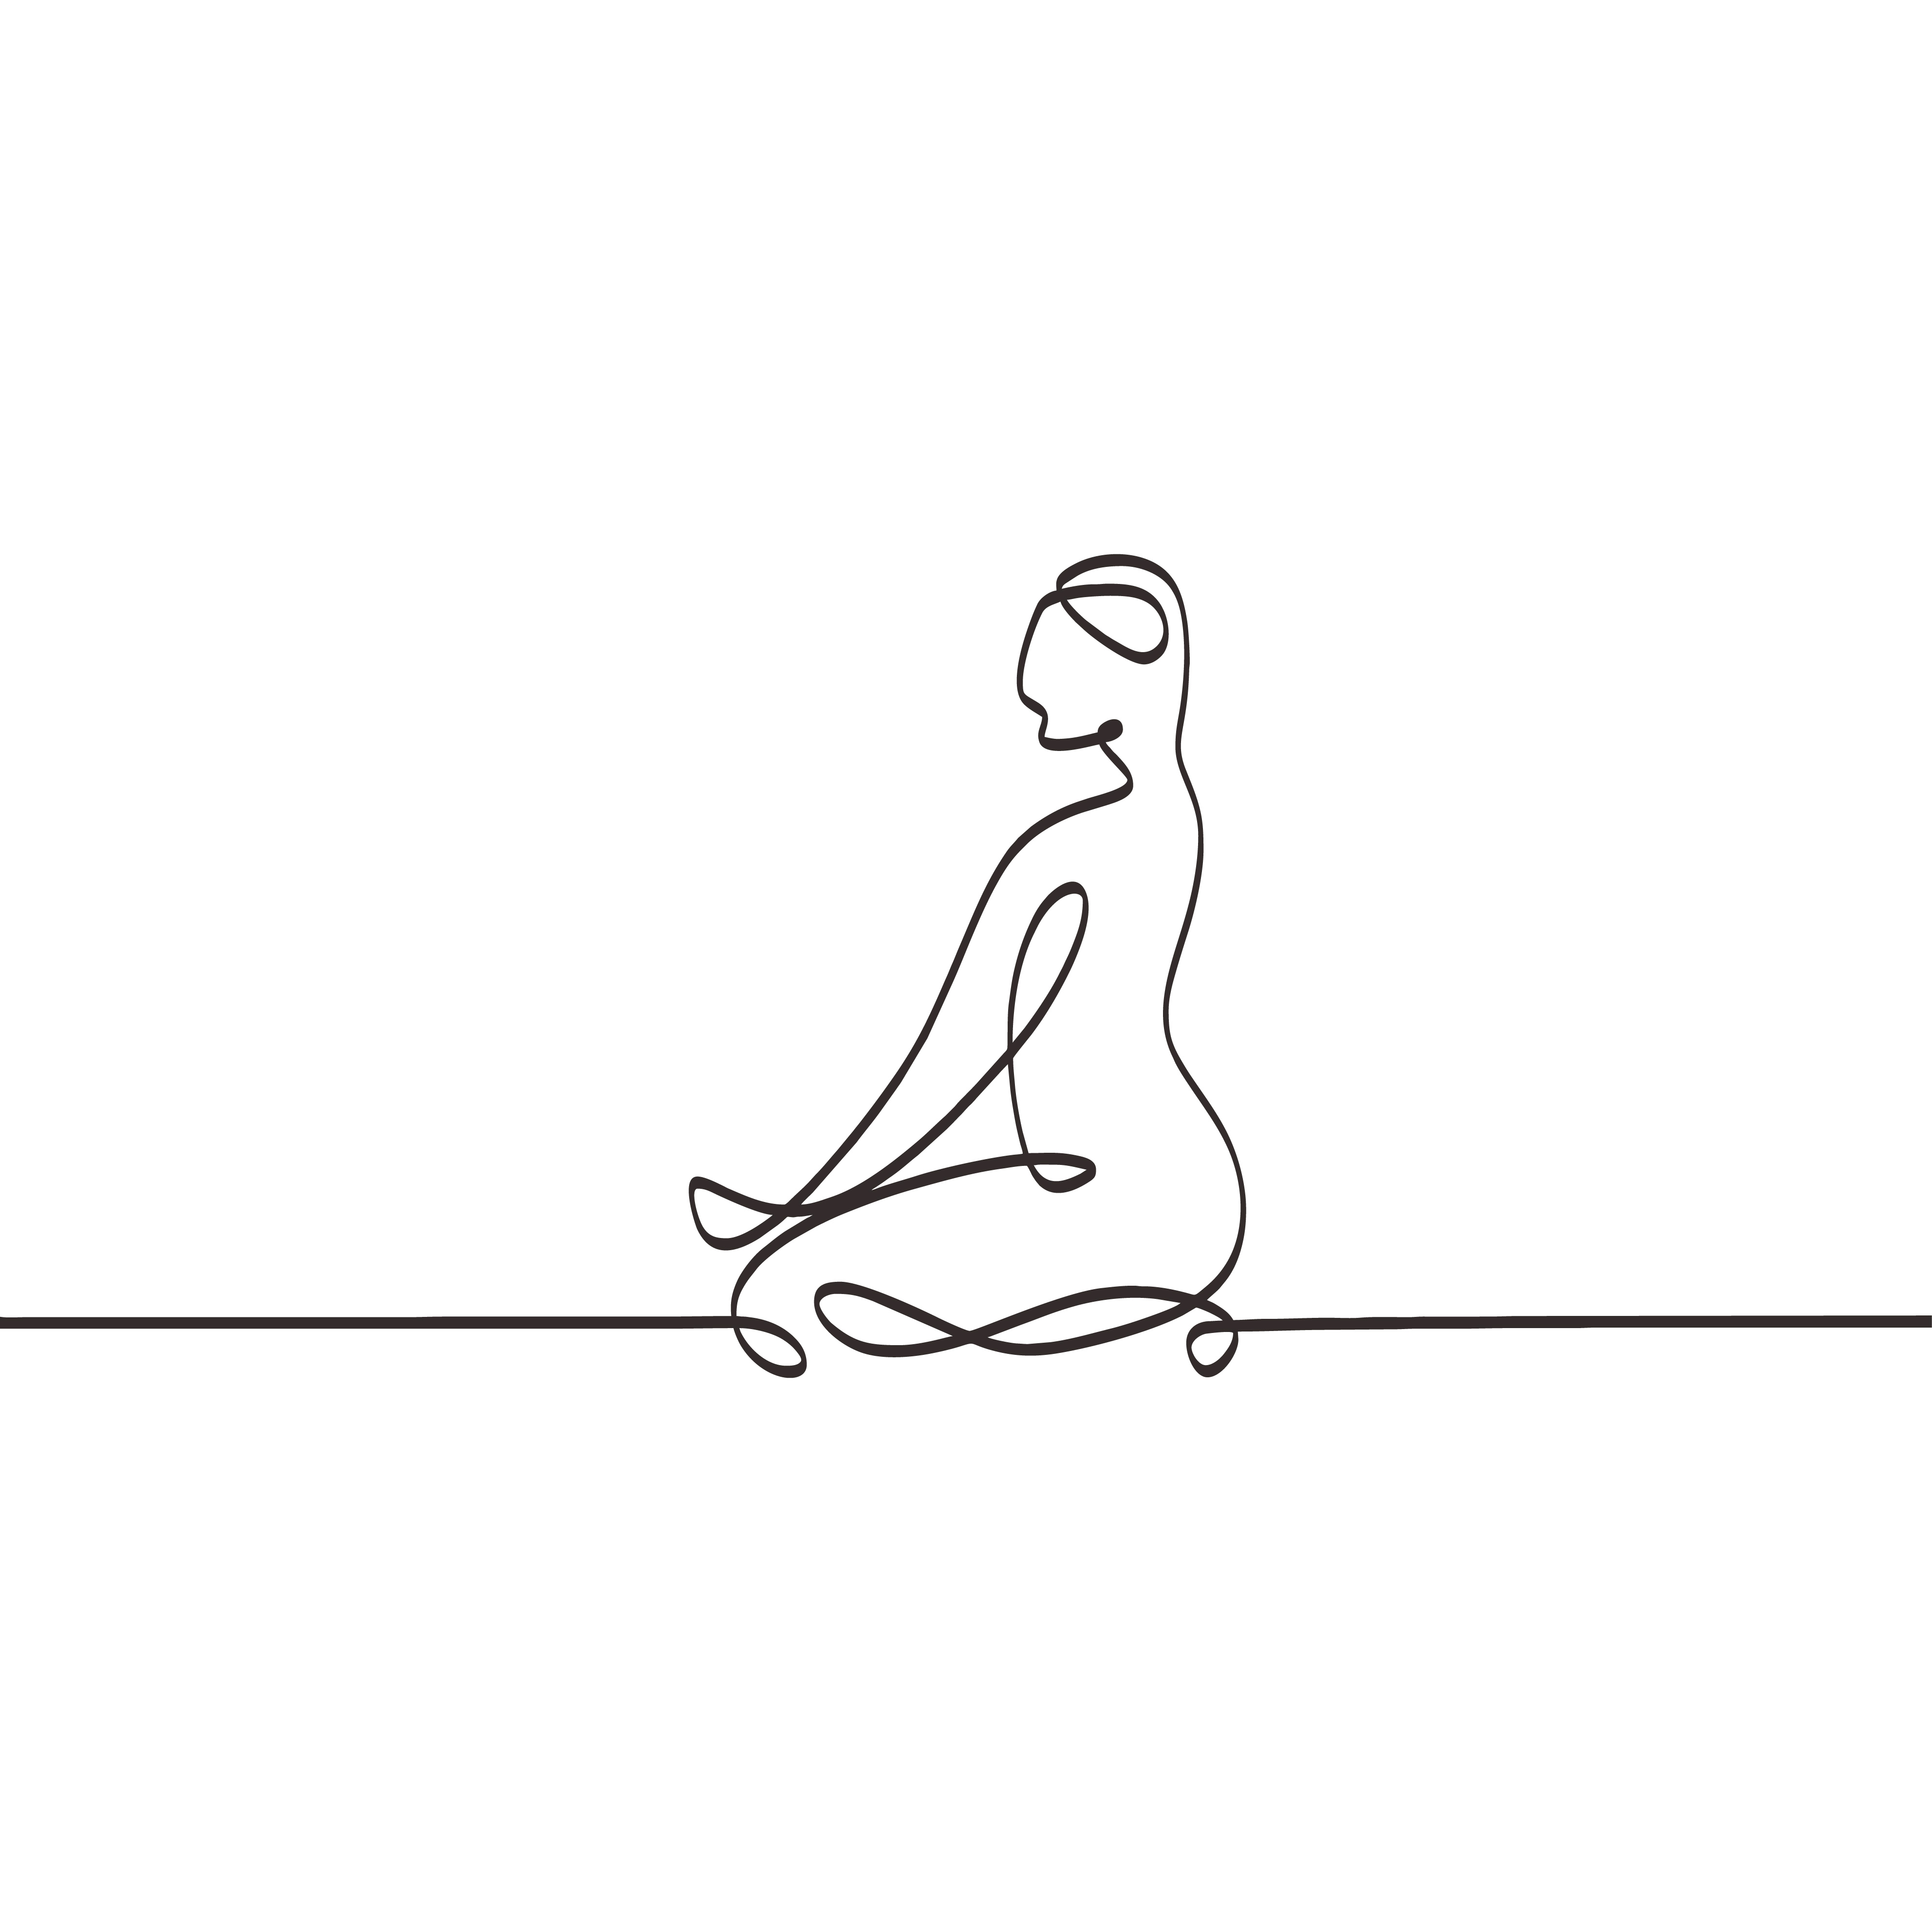 441,492 Meditation Drawing Images, Stock Photos & Vectors | Shutterstock